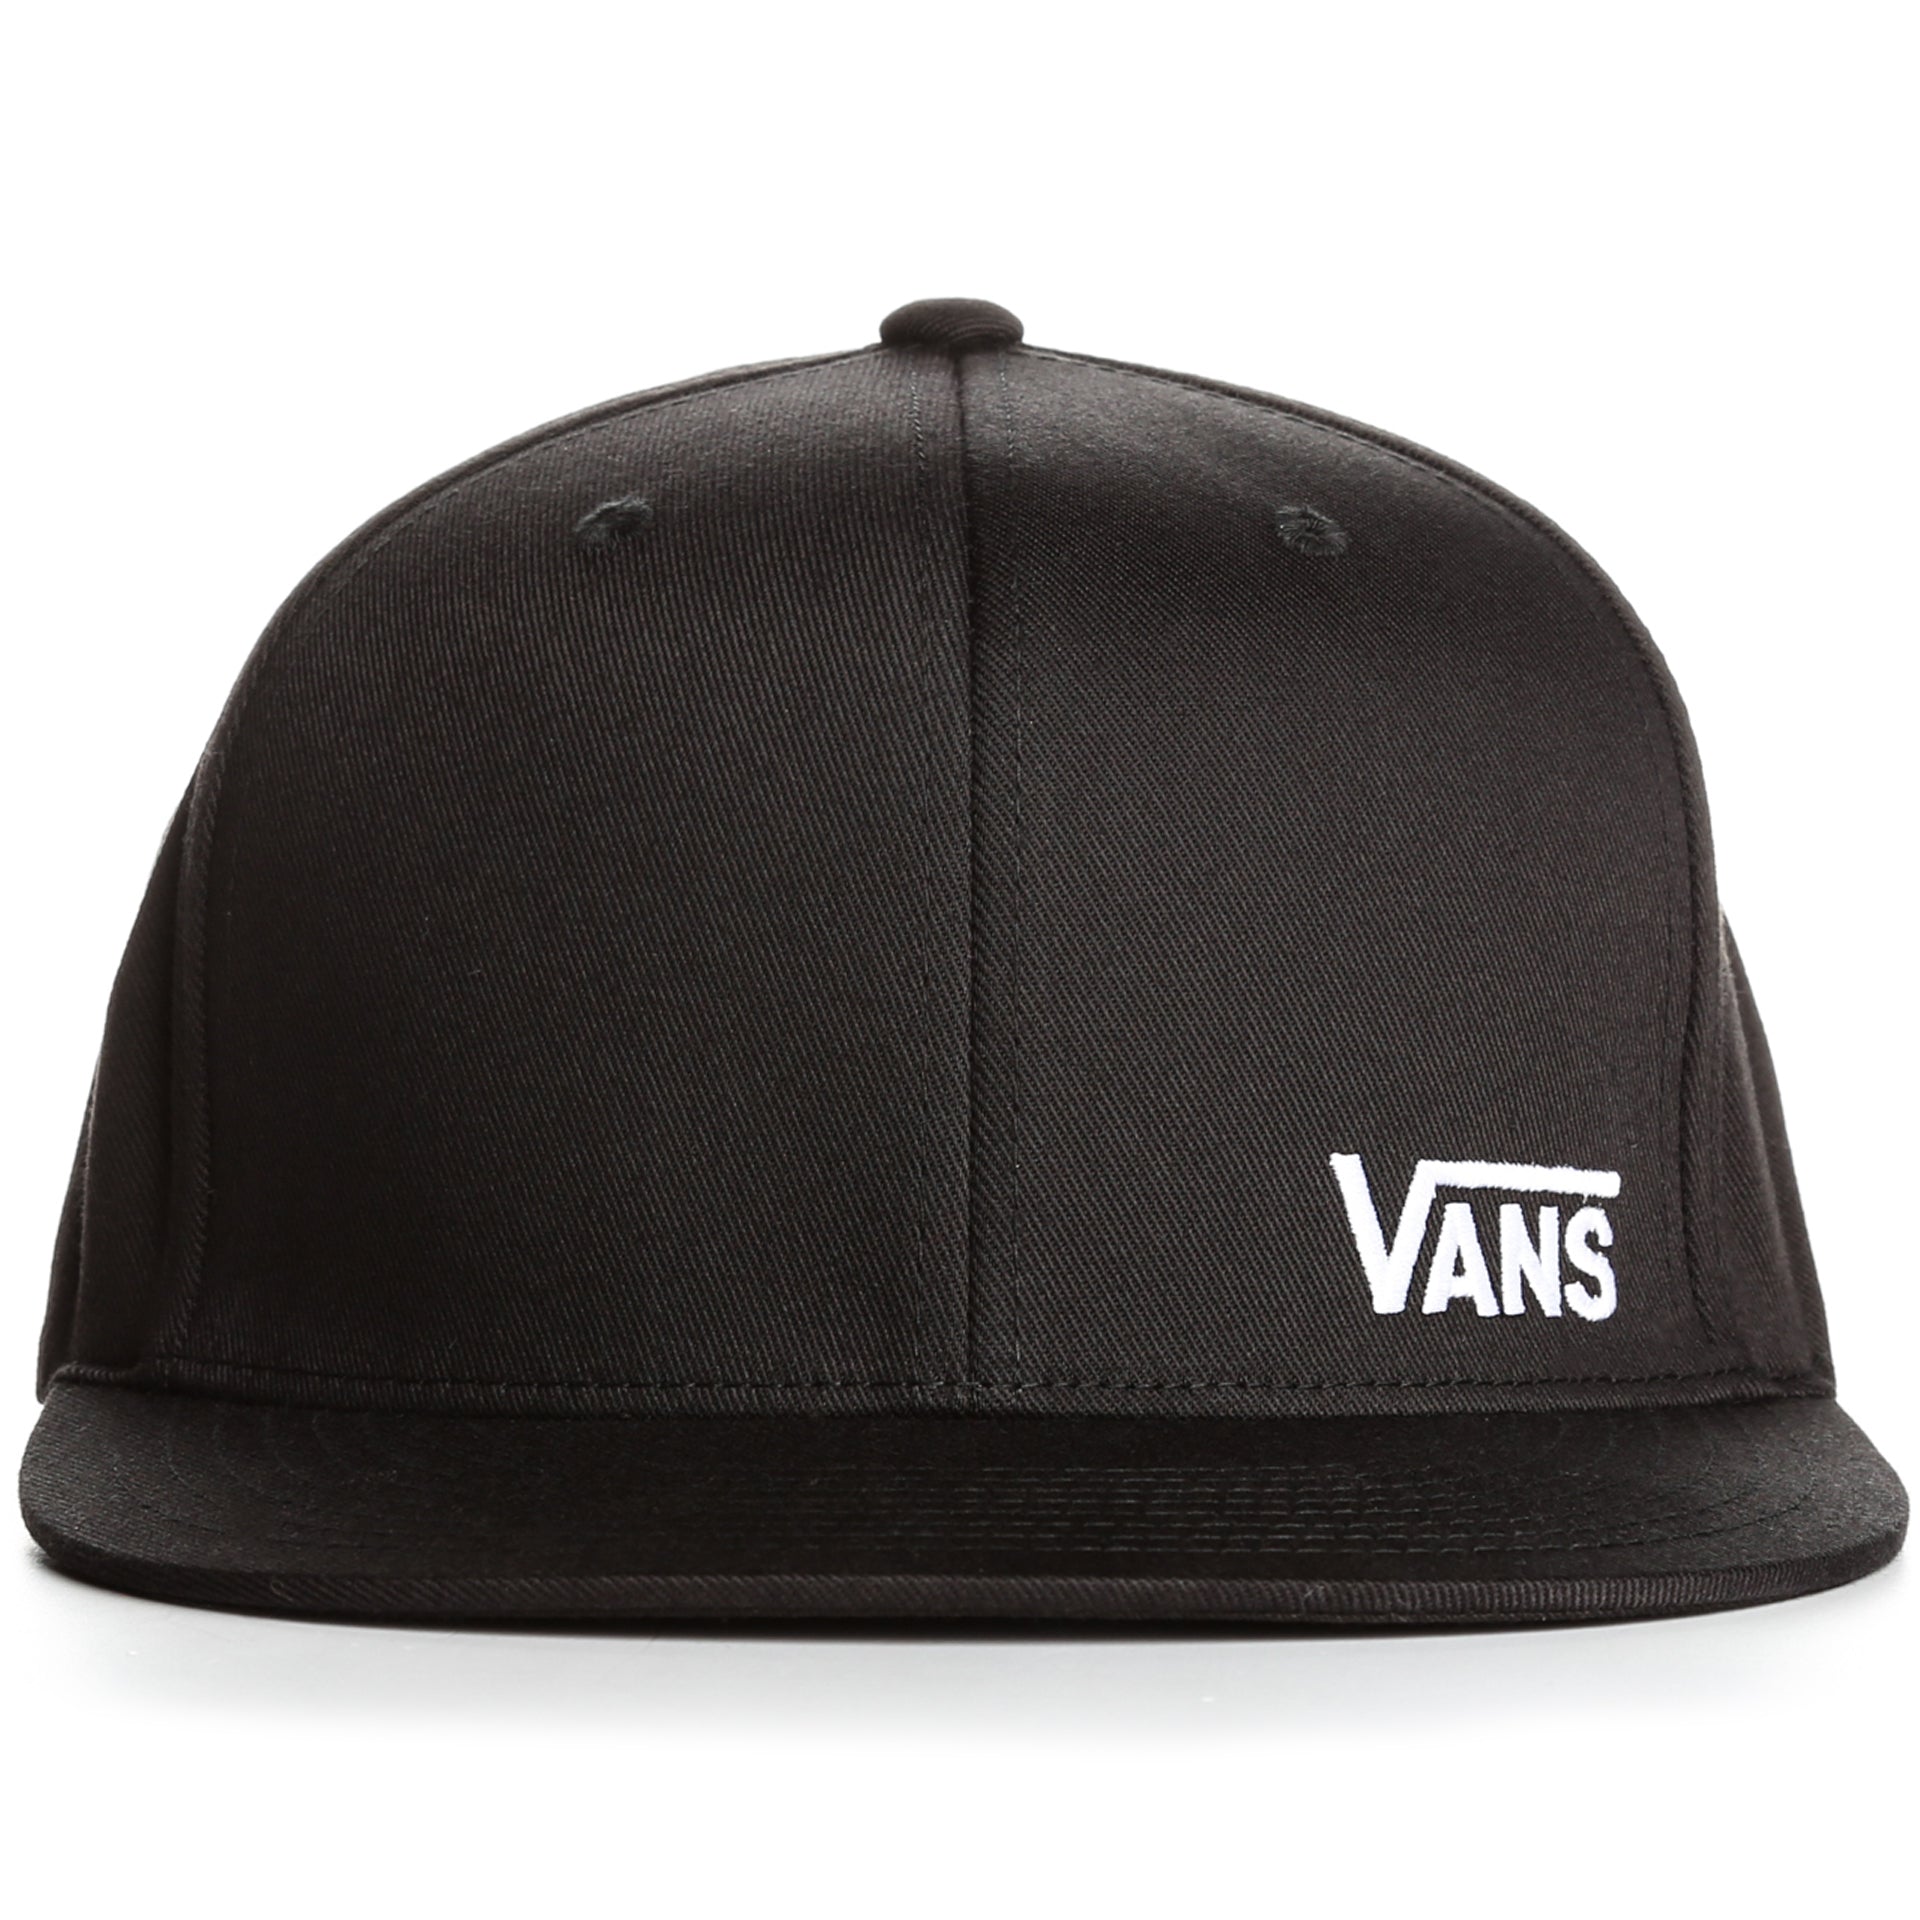 Vans Splitz Flexfit Hat - Black - New Star